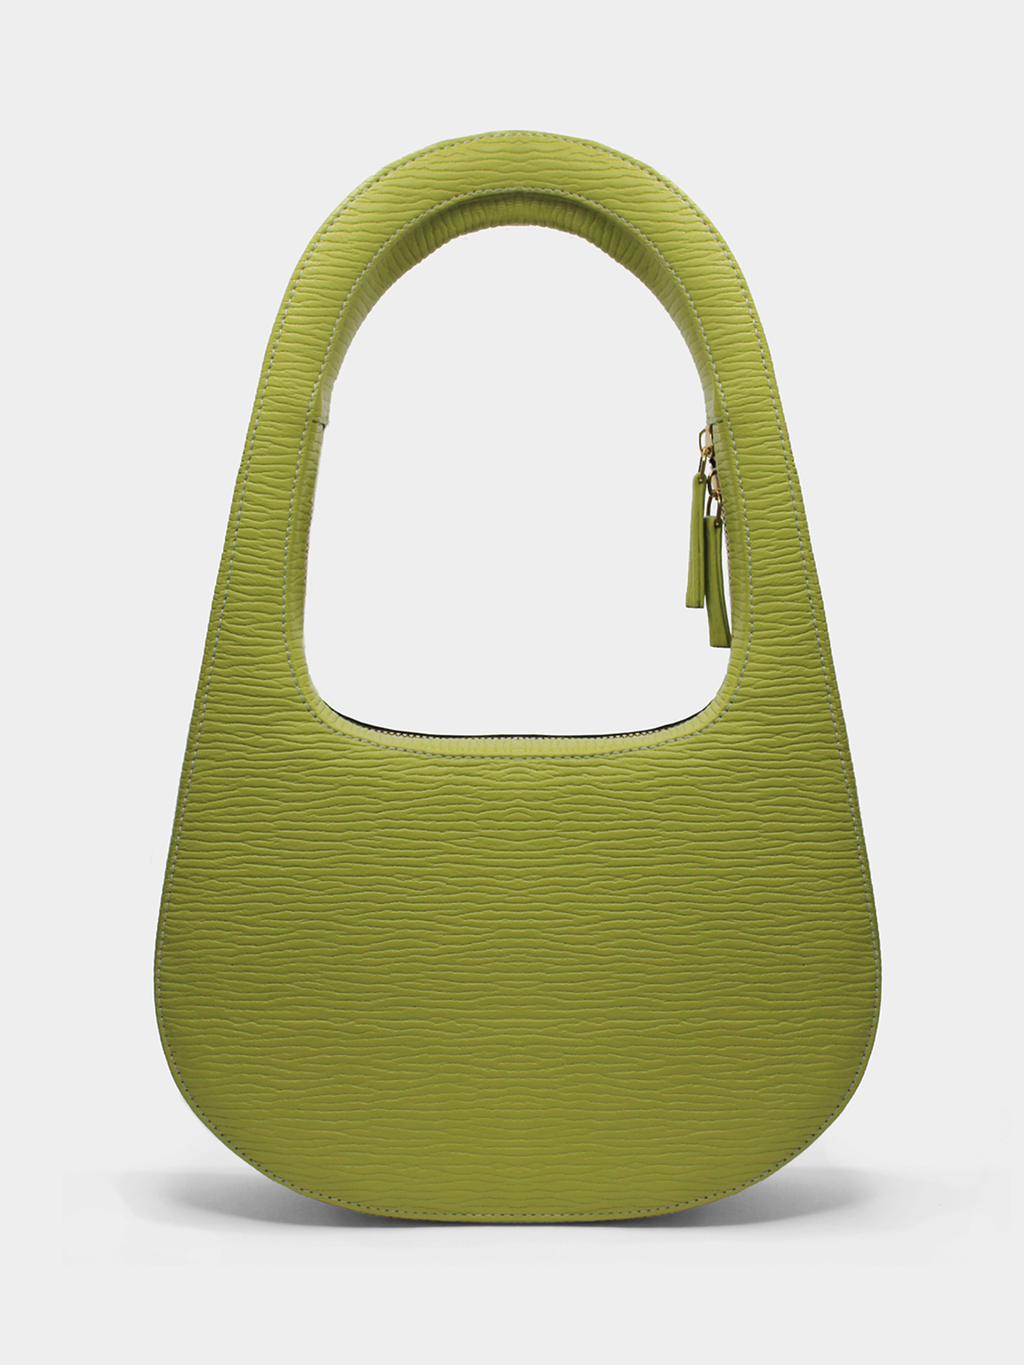 Buy Stylish Handbags Online In India -  India